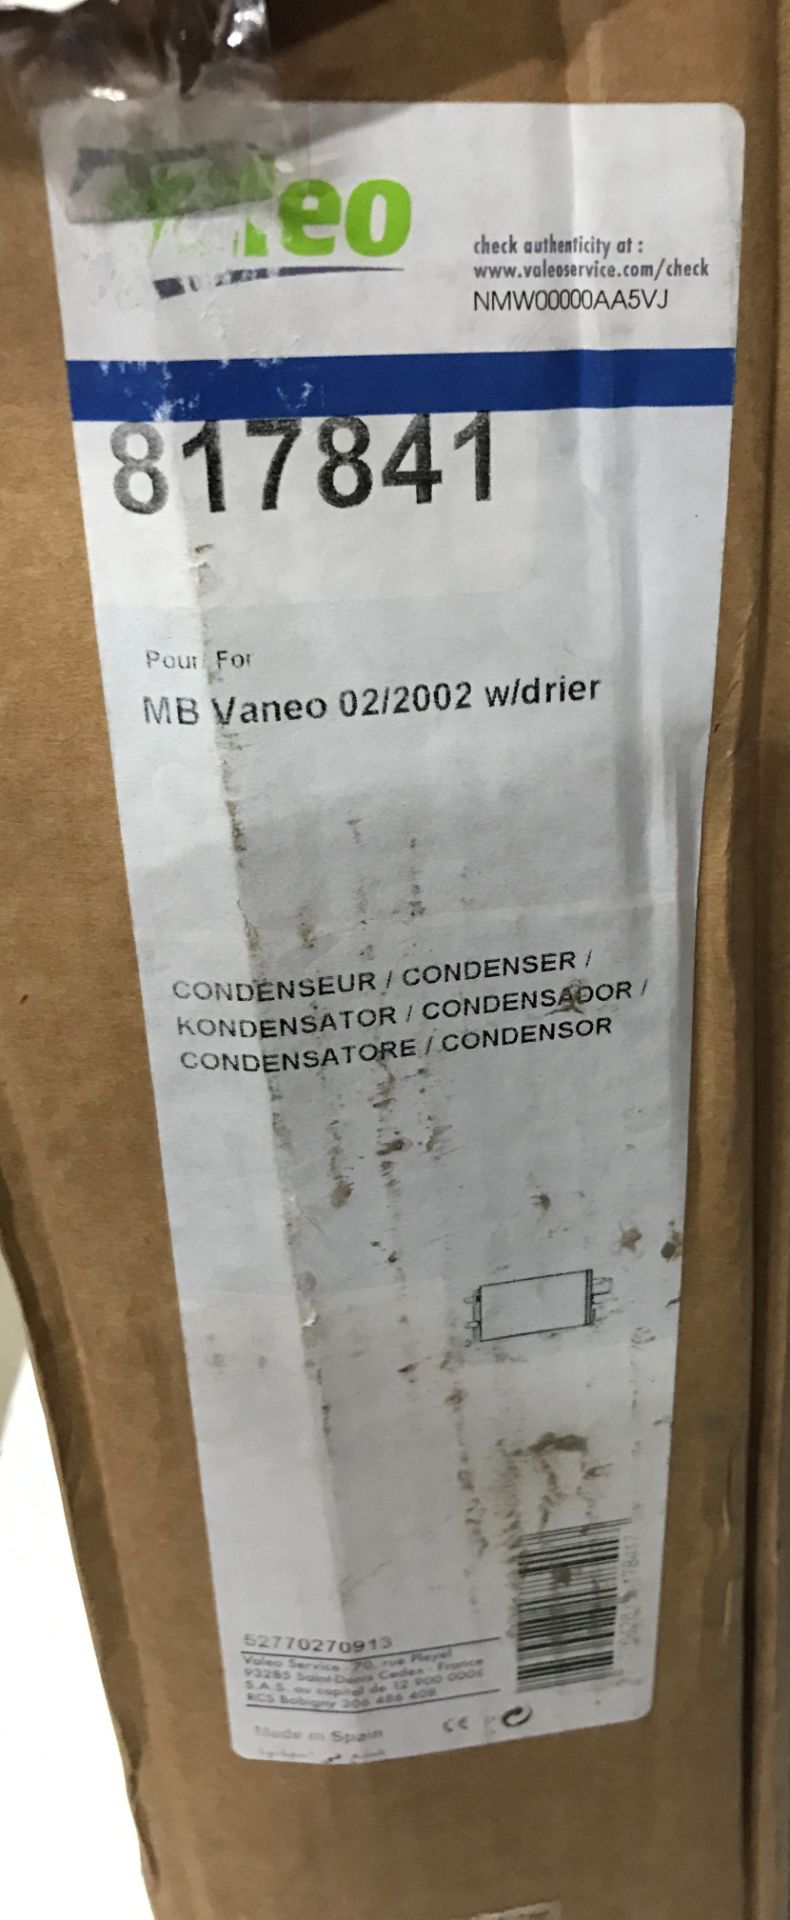 Valeo Car Radiator Item Code: 817841 - Image 2 of 2